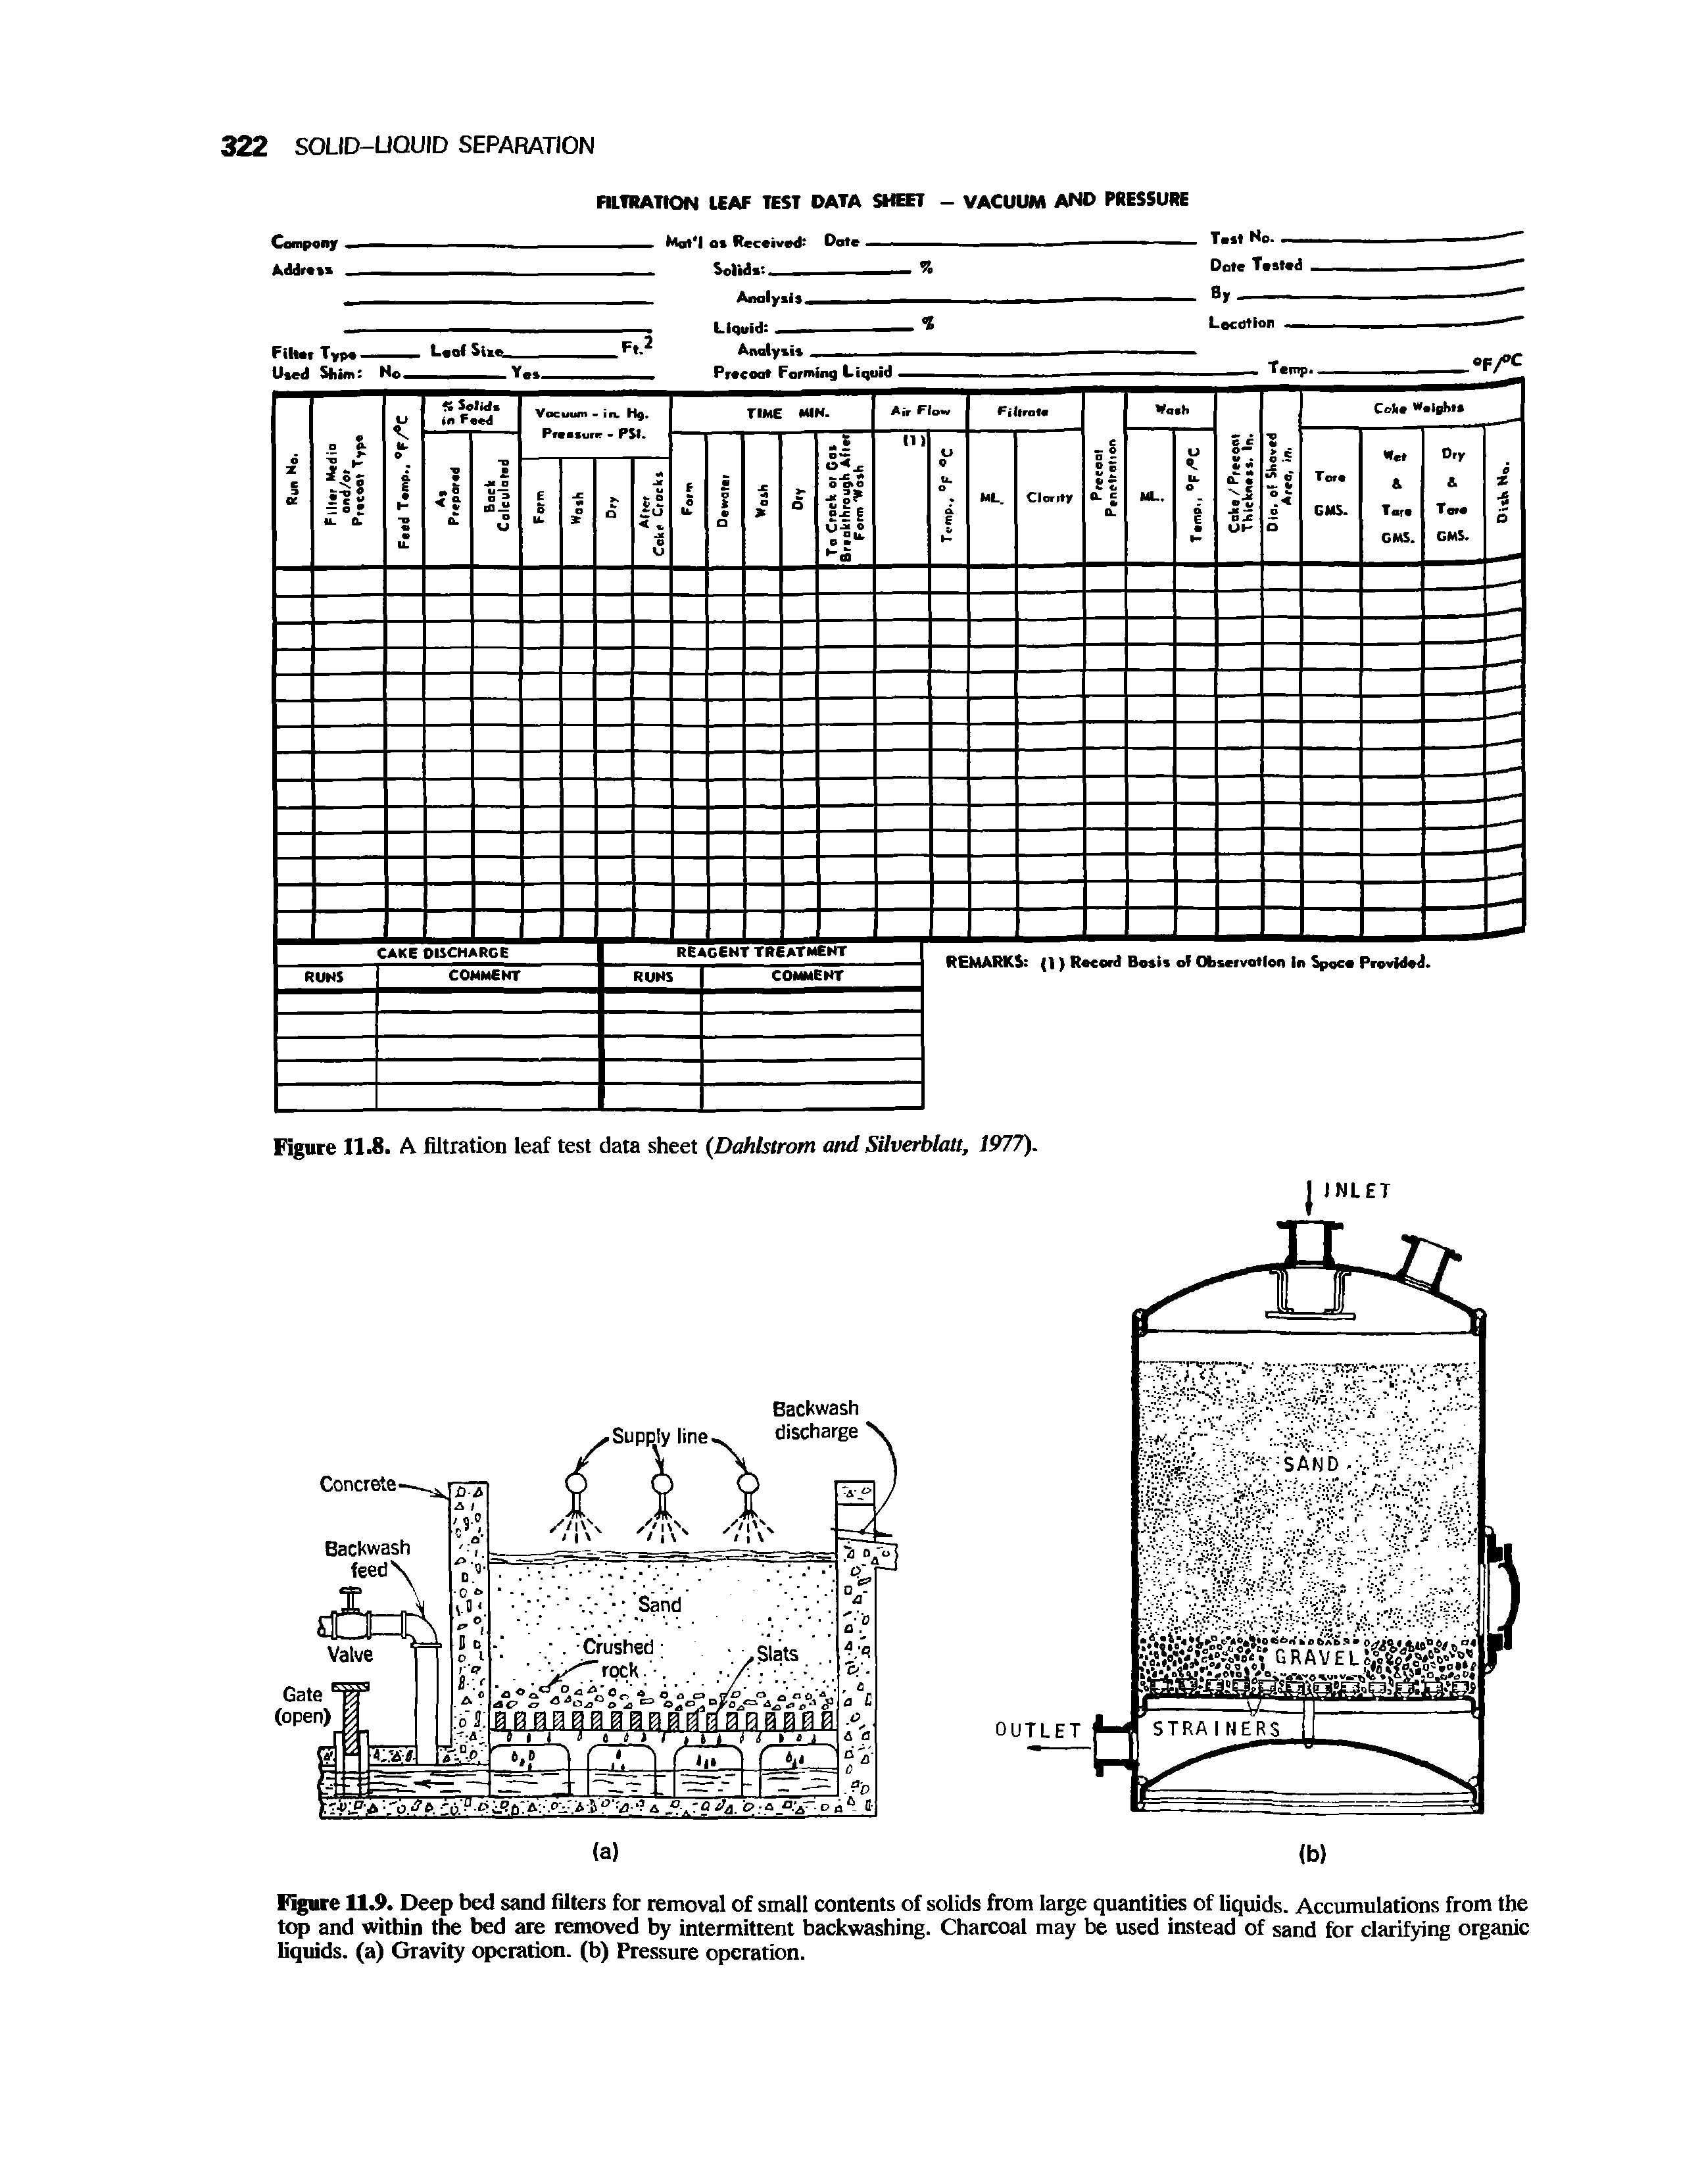 Figure 11.8. A filtration leaf test data sheet (Dahlstrom and Silverblatt, 1977).